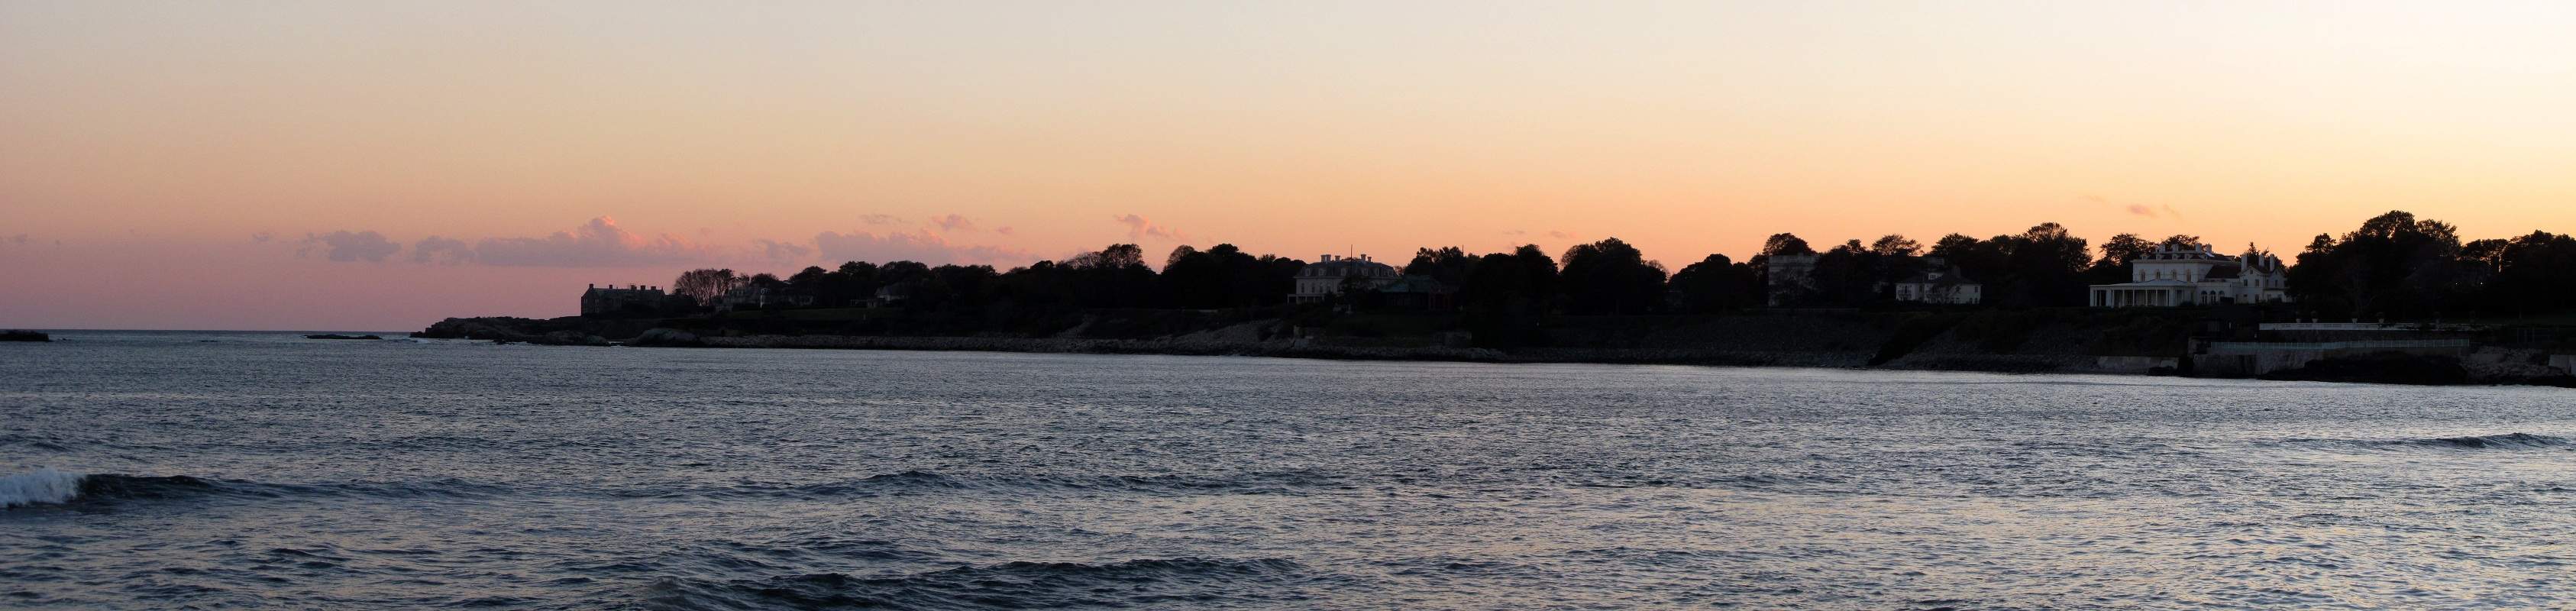 Newport, Rhode Island - Panorama